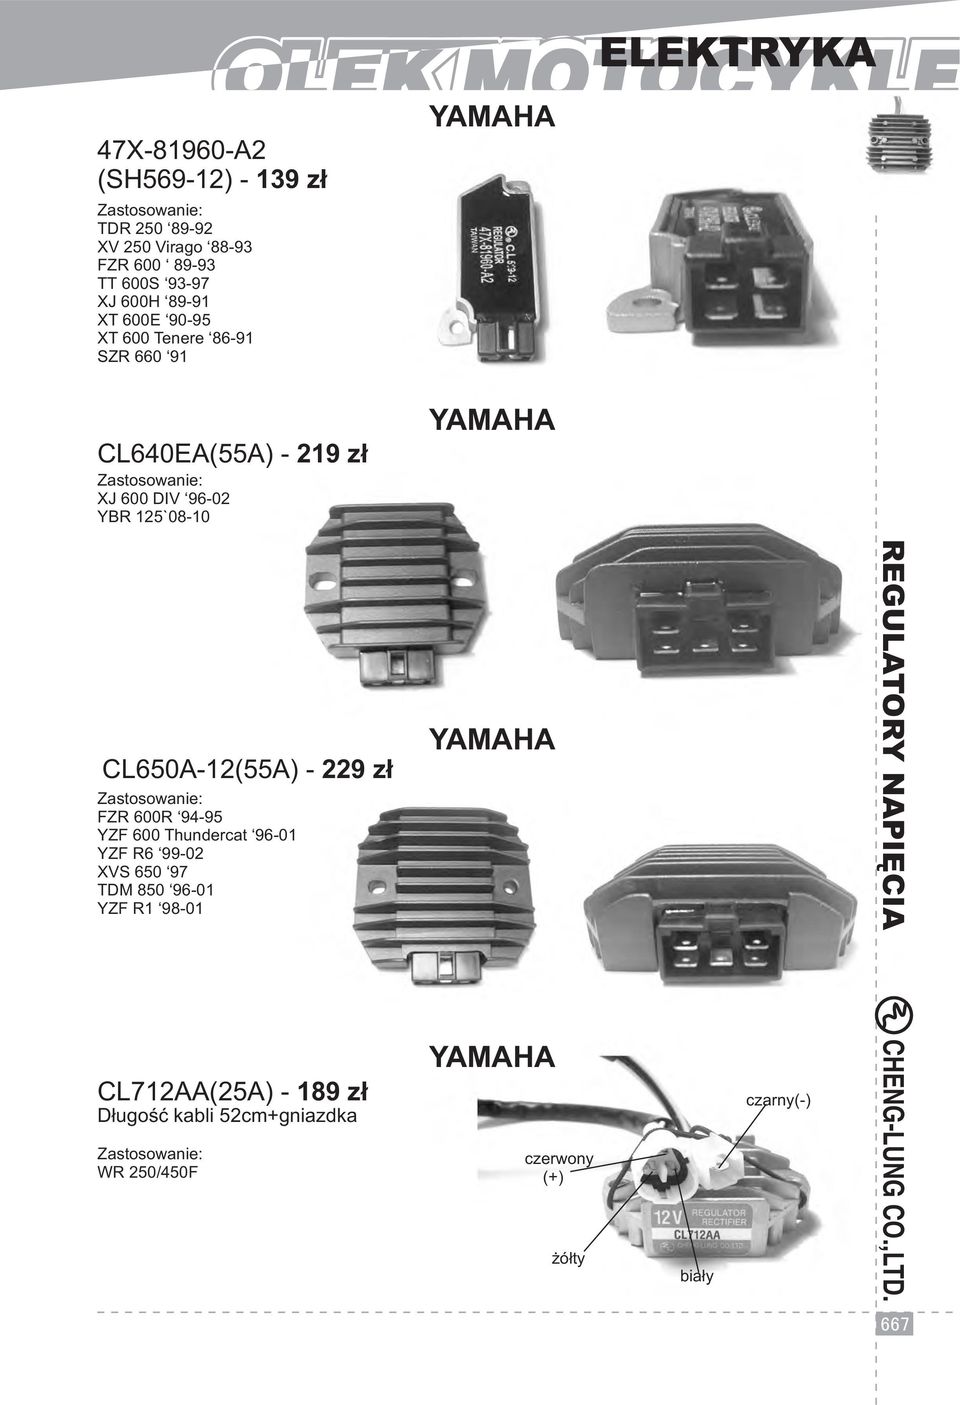 125`08-10 CL650A-12(55A) - 229 zł FZR 600R 94-95 YZF 600 Thundercat 96-01 YZF R6 99-02 XVS 650 97 TDM